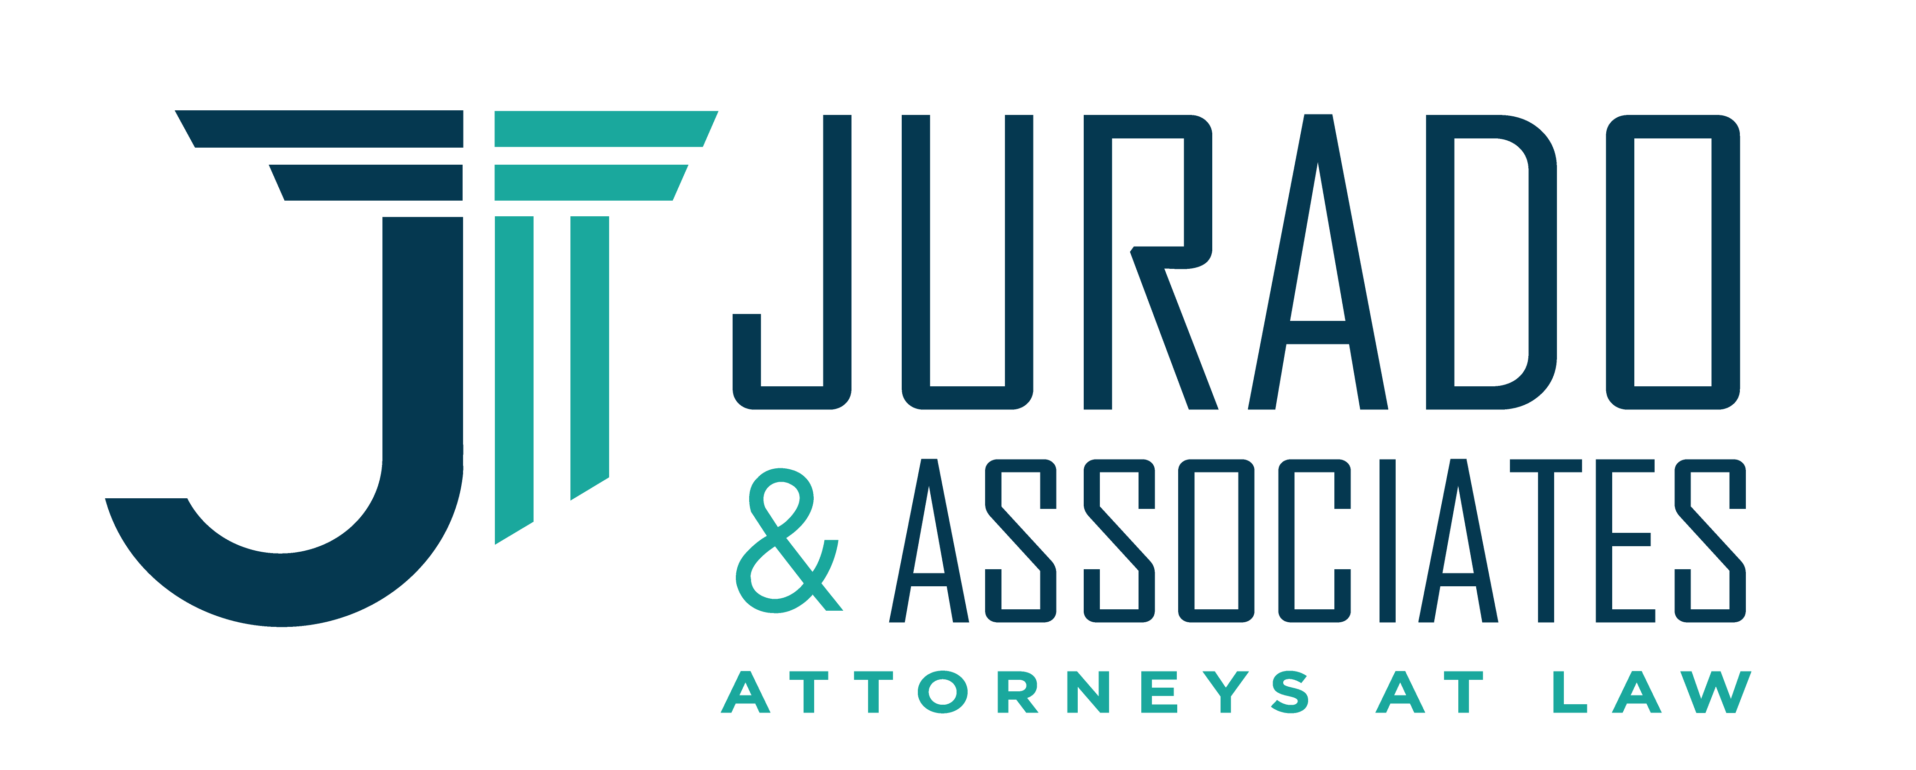 Jurado & Associates, PA Sus Abogados Testamentarios De Confianza en Florida (305) 921-0976 Romy@juradolawfirm.com